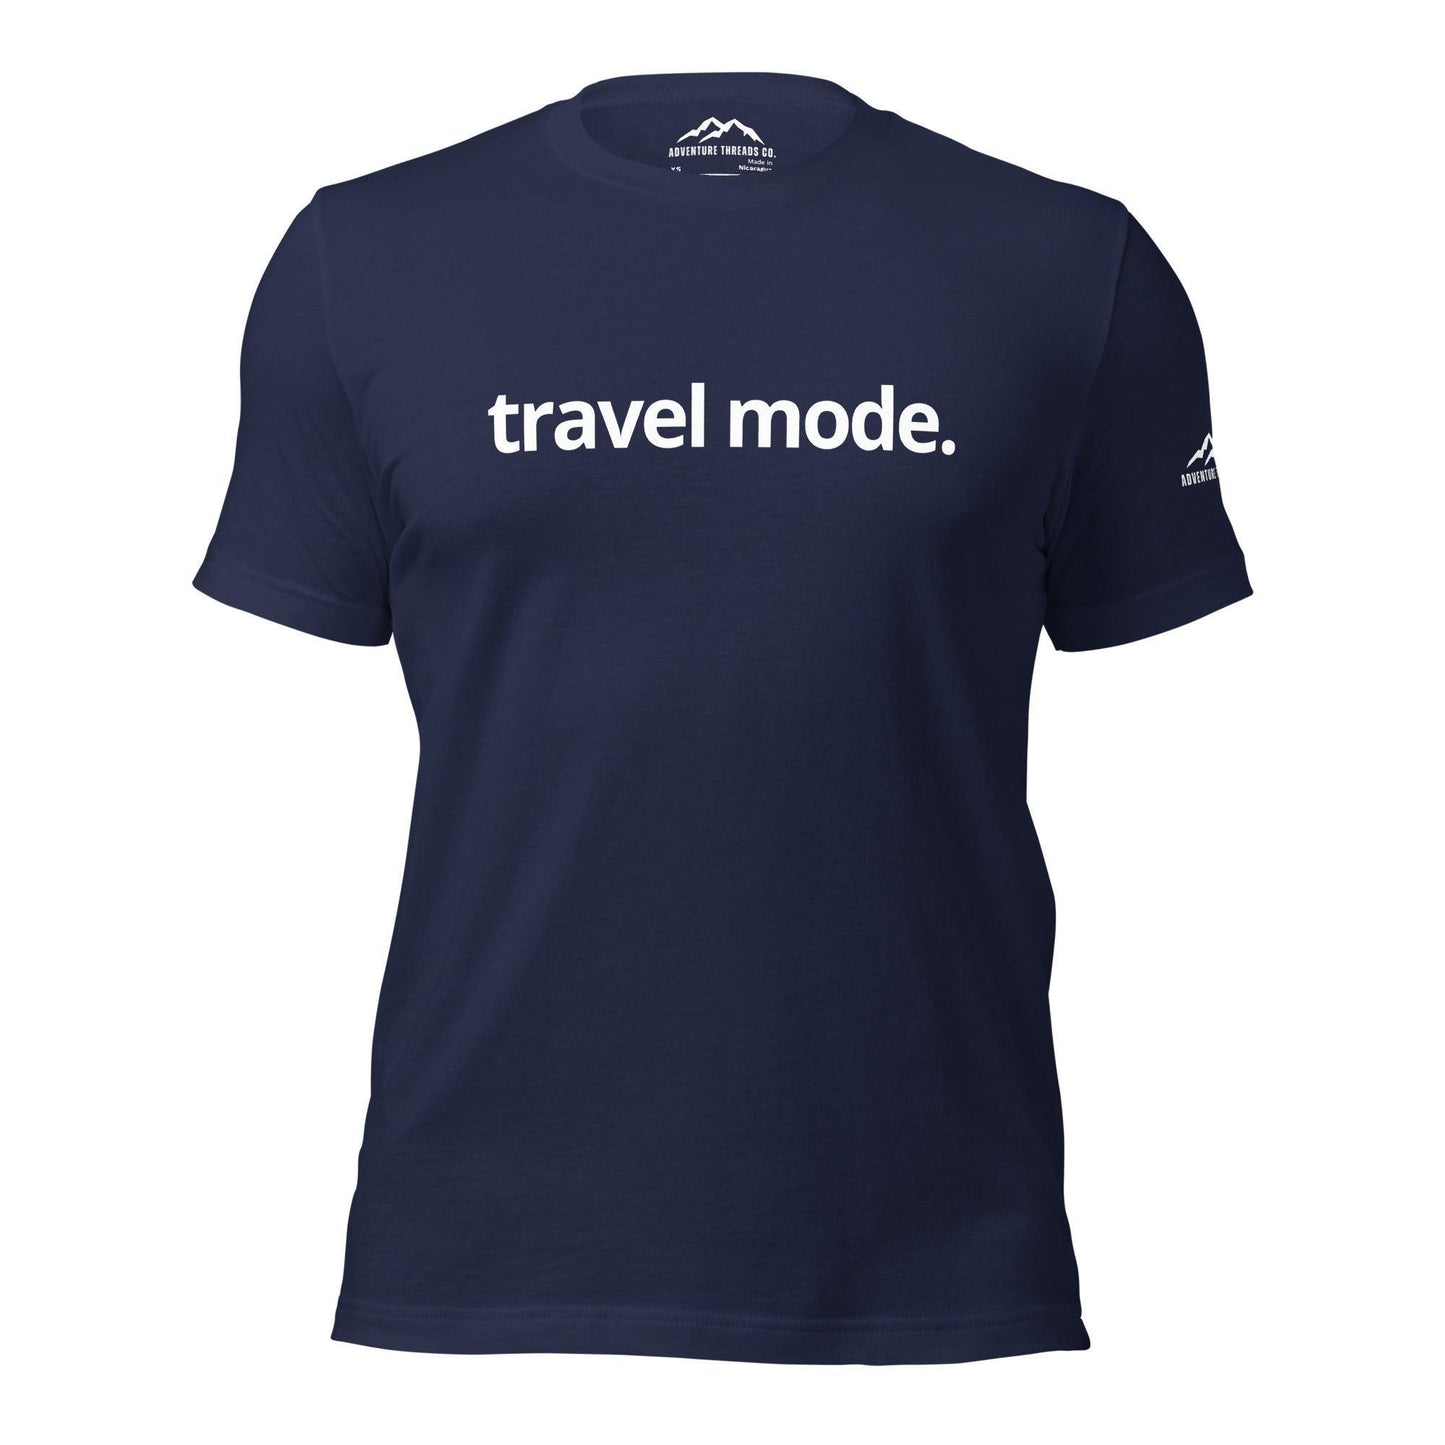 Travel Mode. T-shirt - Adventure Threads Company